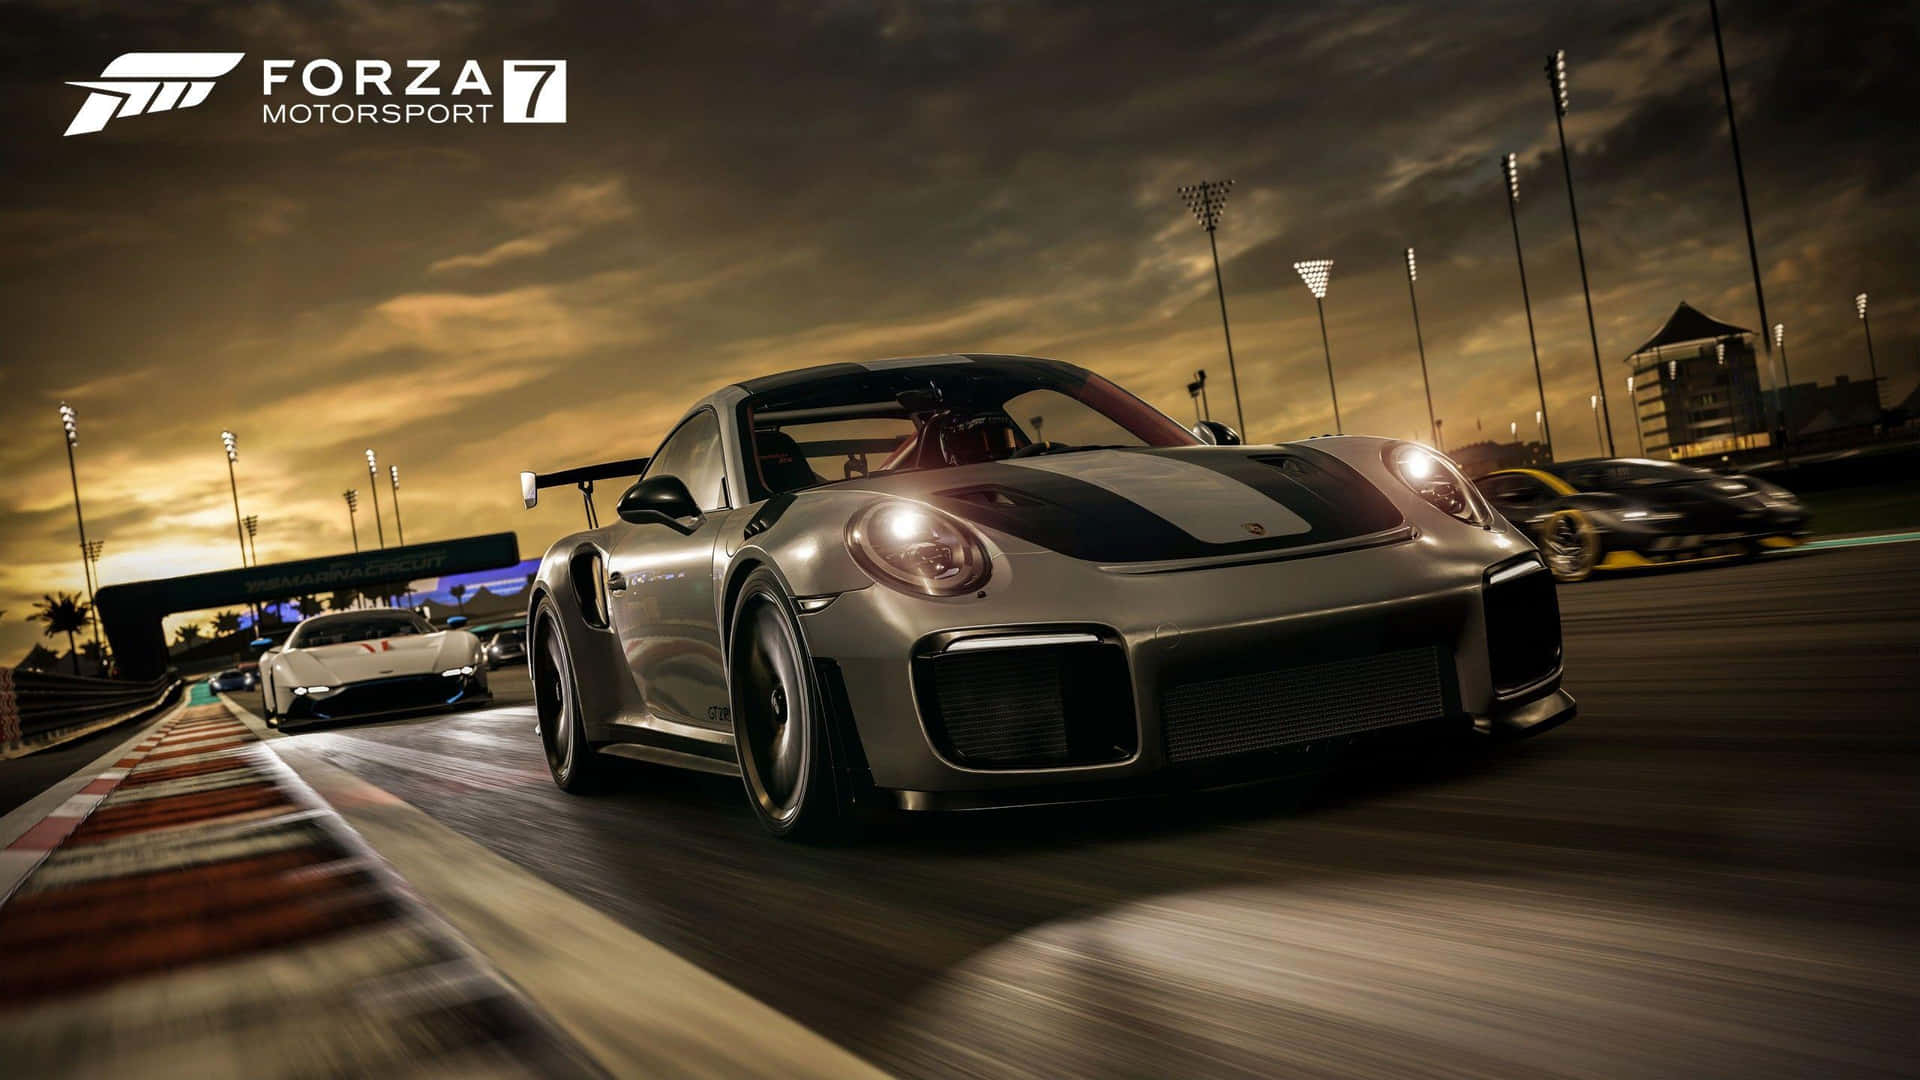 Forza7 - Skærmbilleder